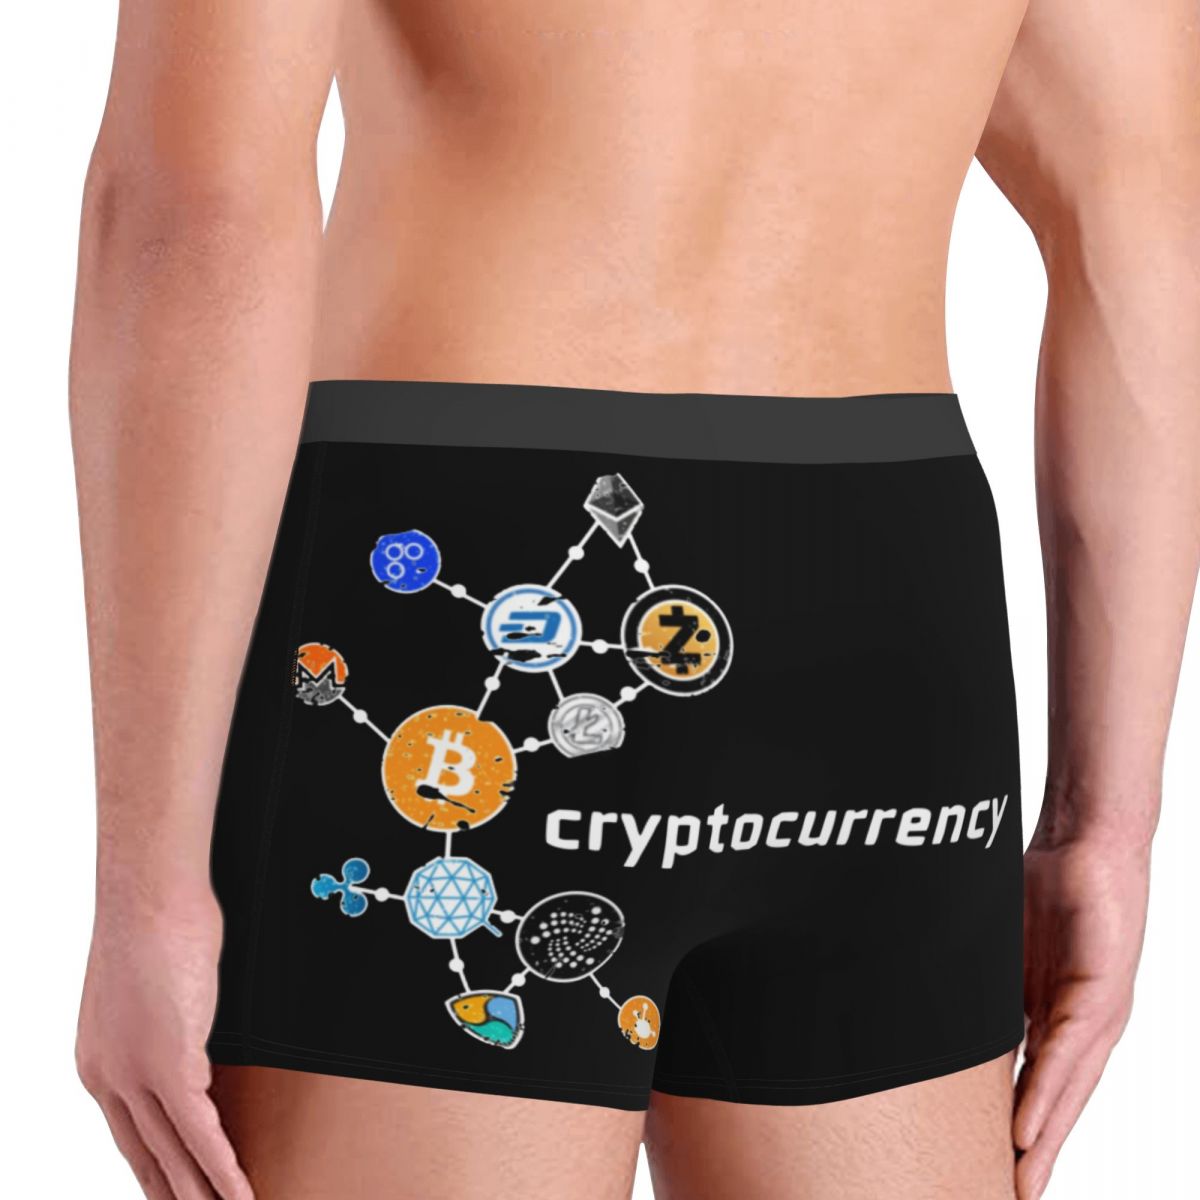 Cryptocurrency Underwear